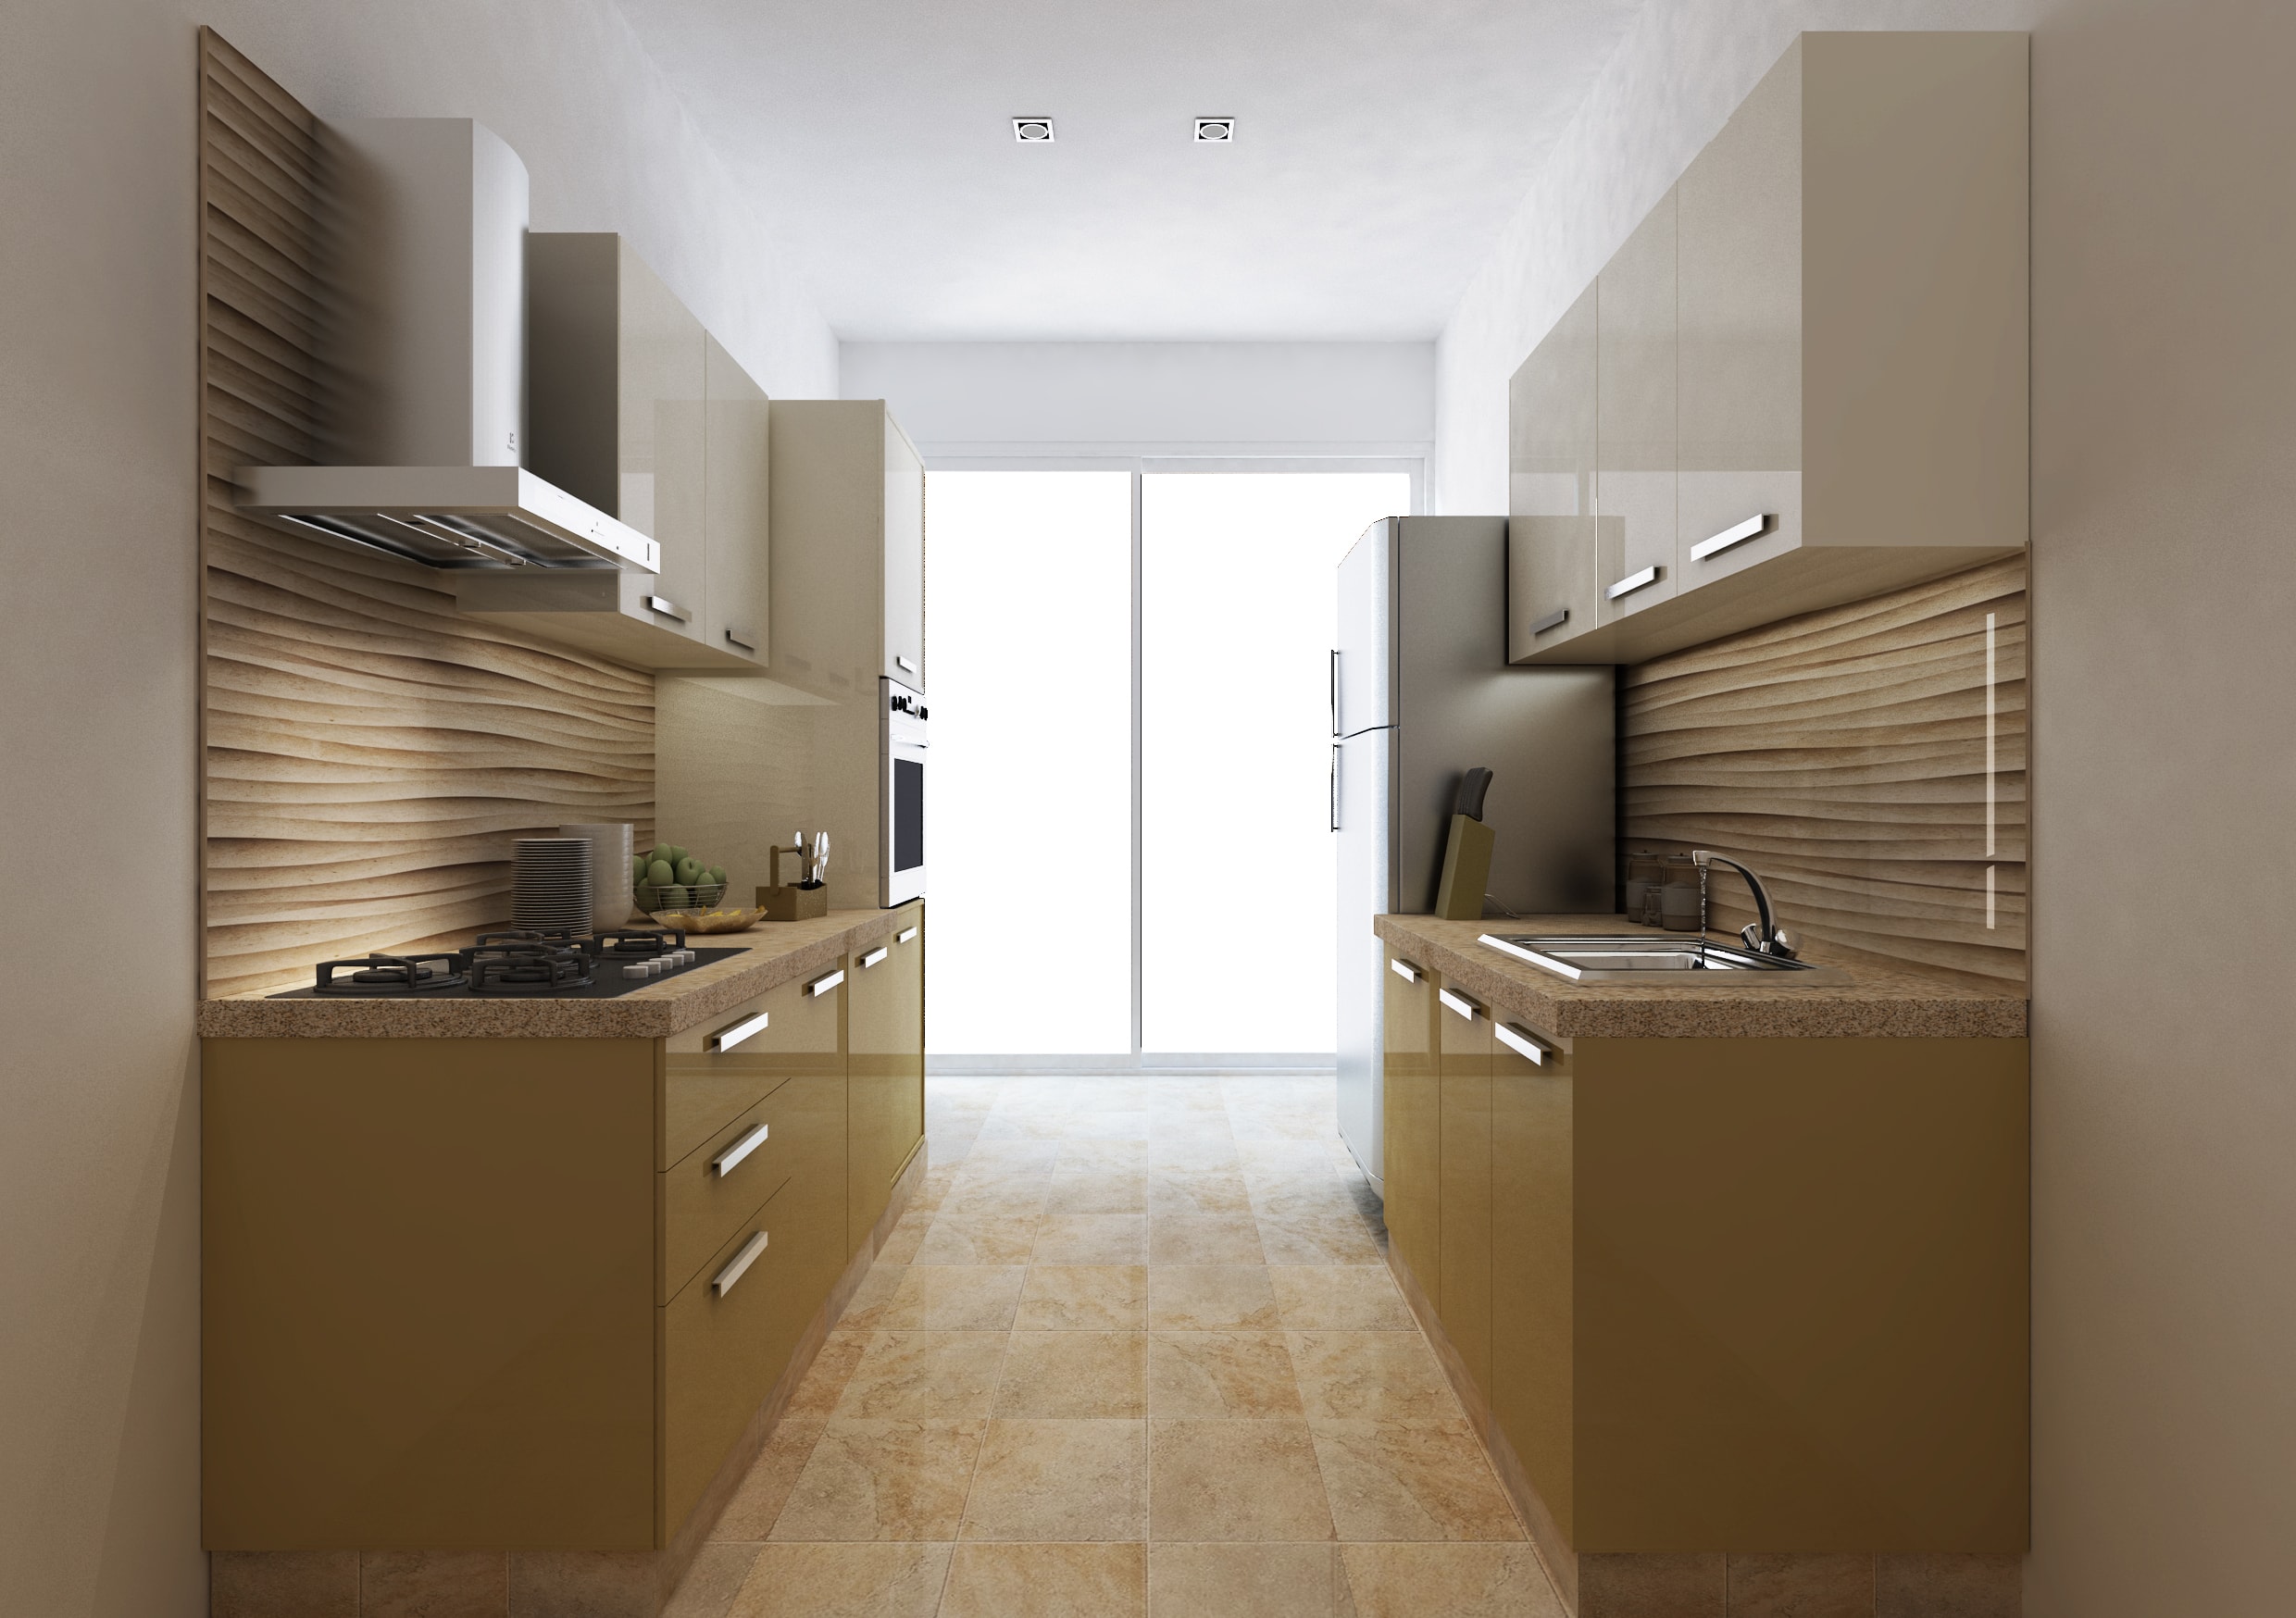 parallel kitchen design image